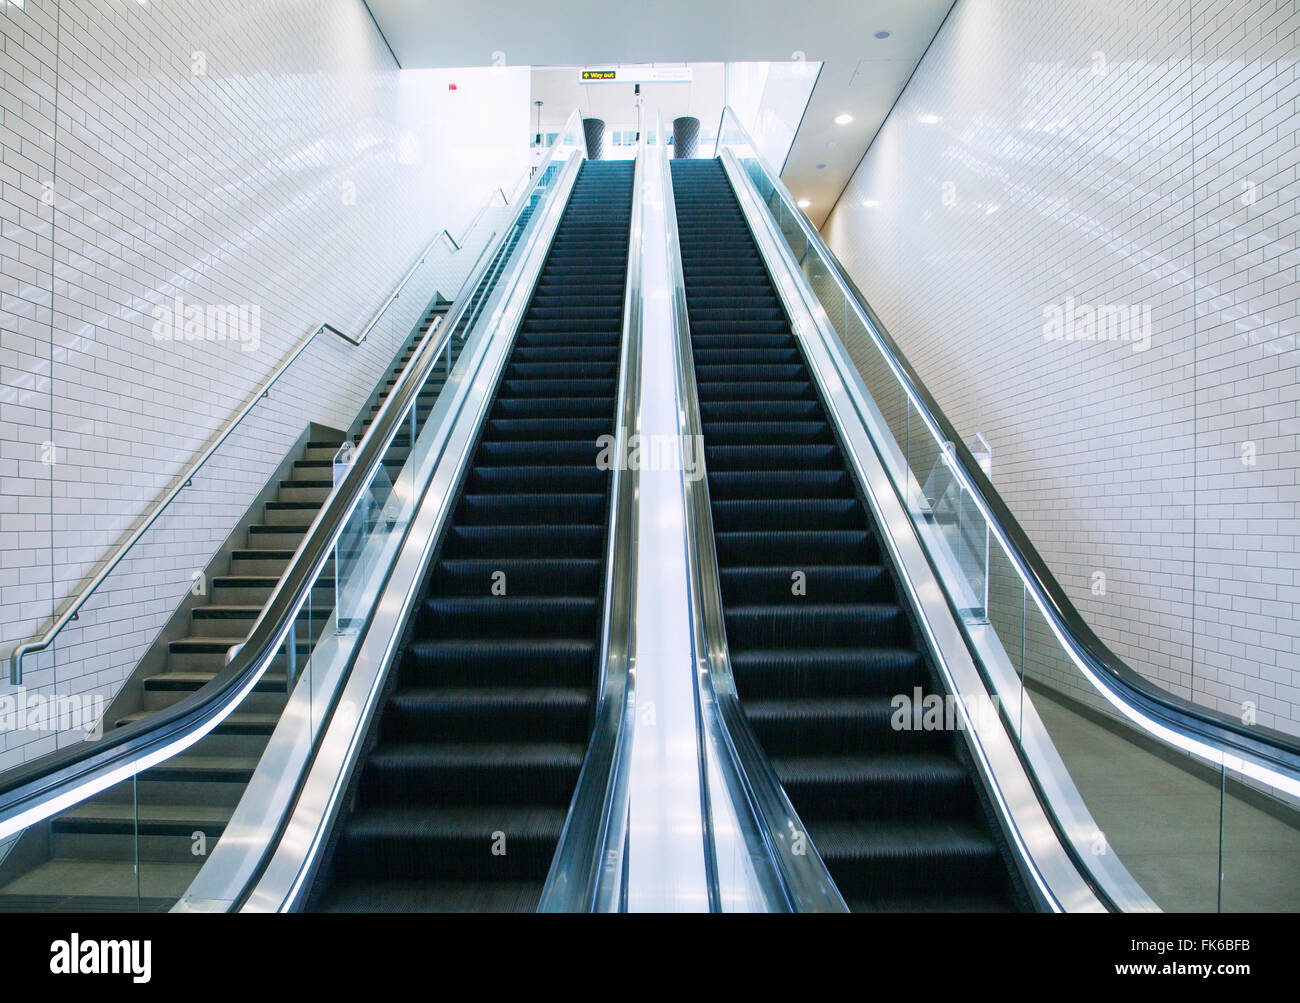 Tube station escalator and stairs, United Kingdom, Europe Stock Photo